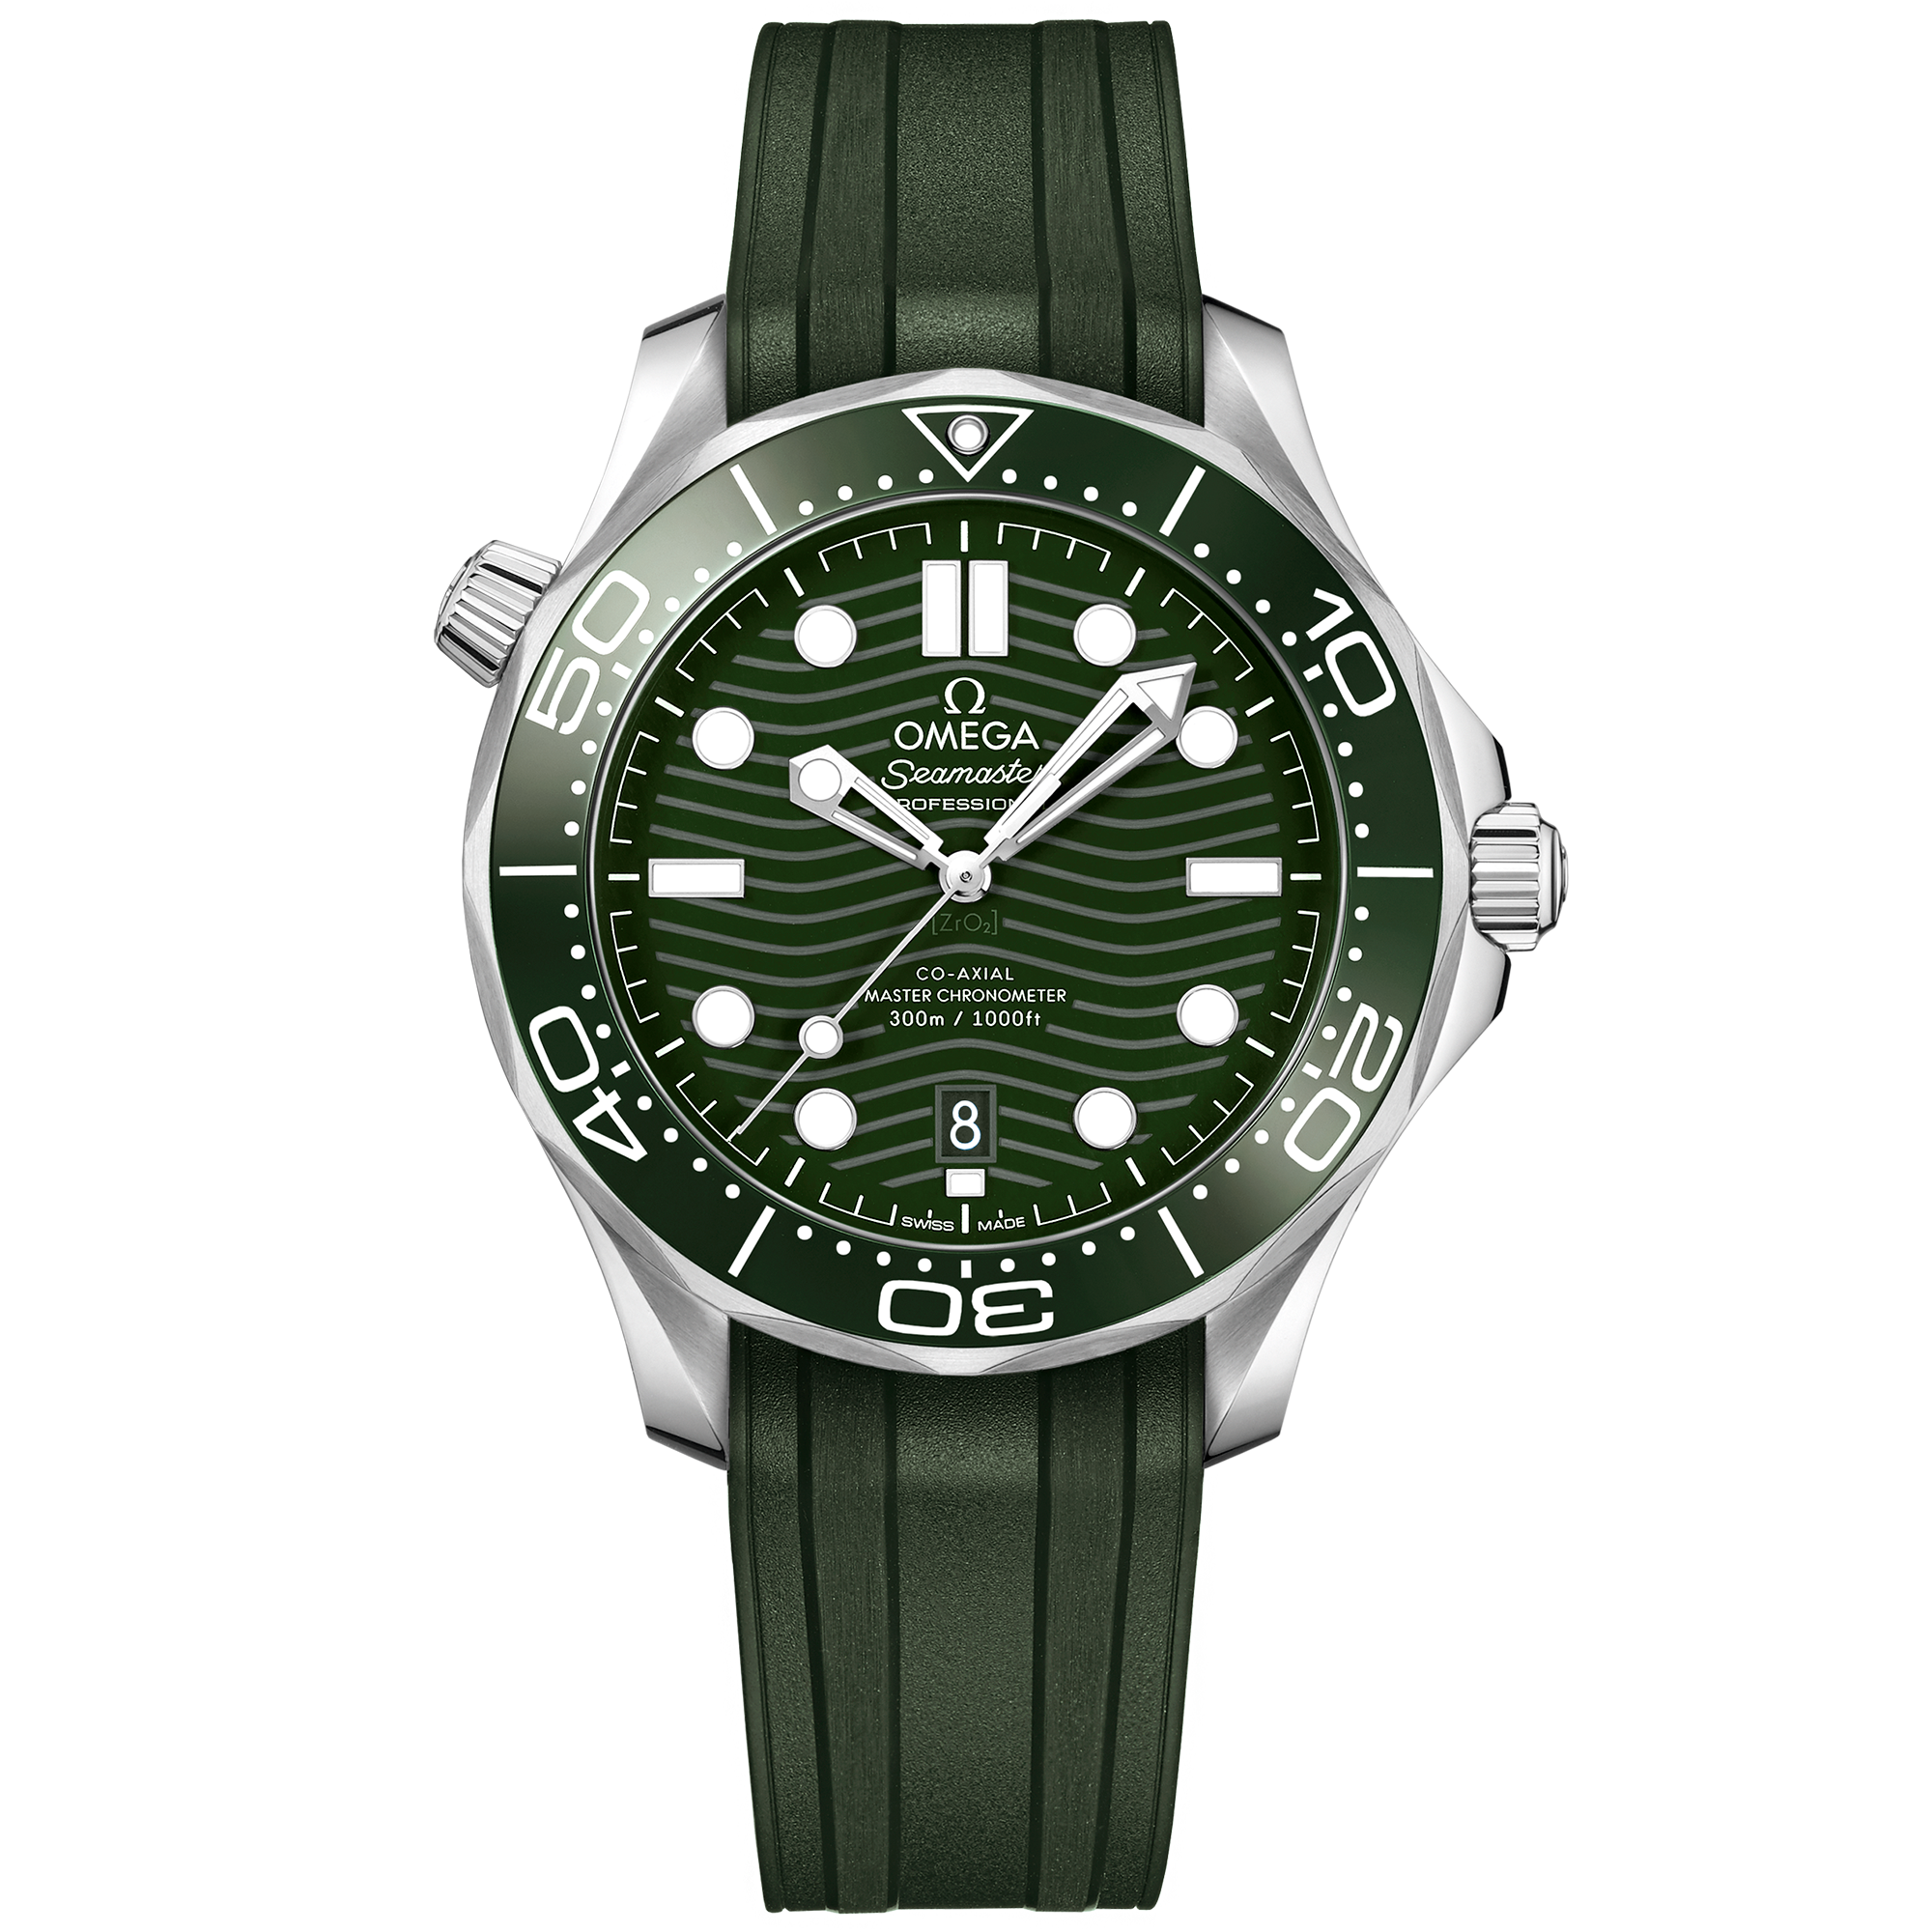 Seamaster Steel Chronometer Watch 210.32.42.20.01.001 | OMEGA US®